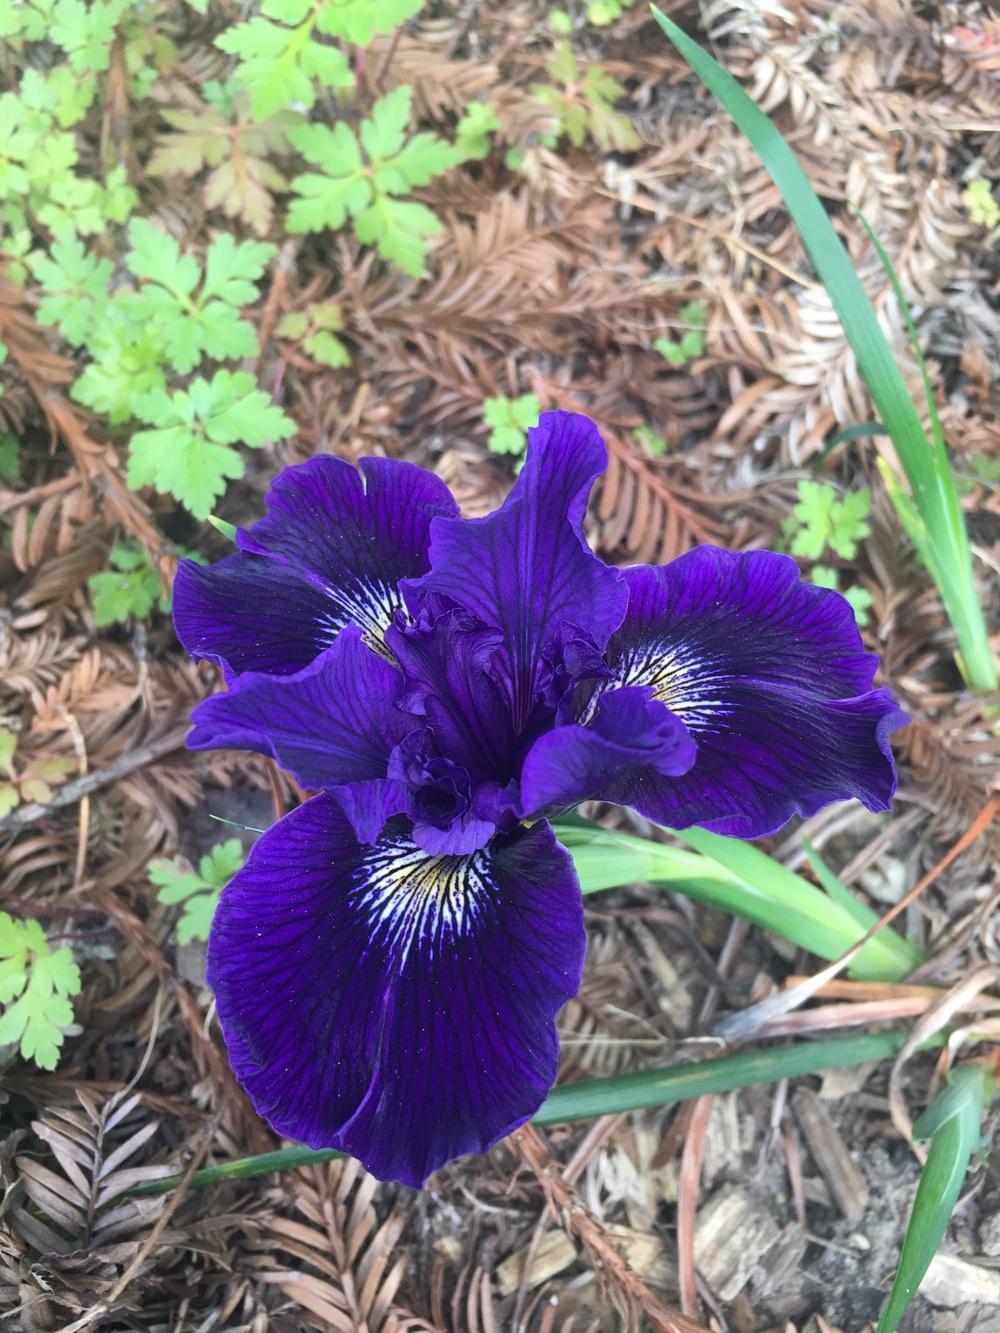 Photo of Pacific Coast Iris (Iris 'Deep Blue Sea') uploaded by Calif_Sue